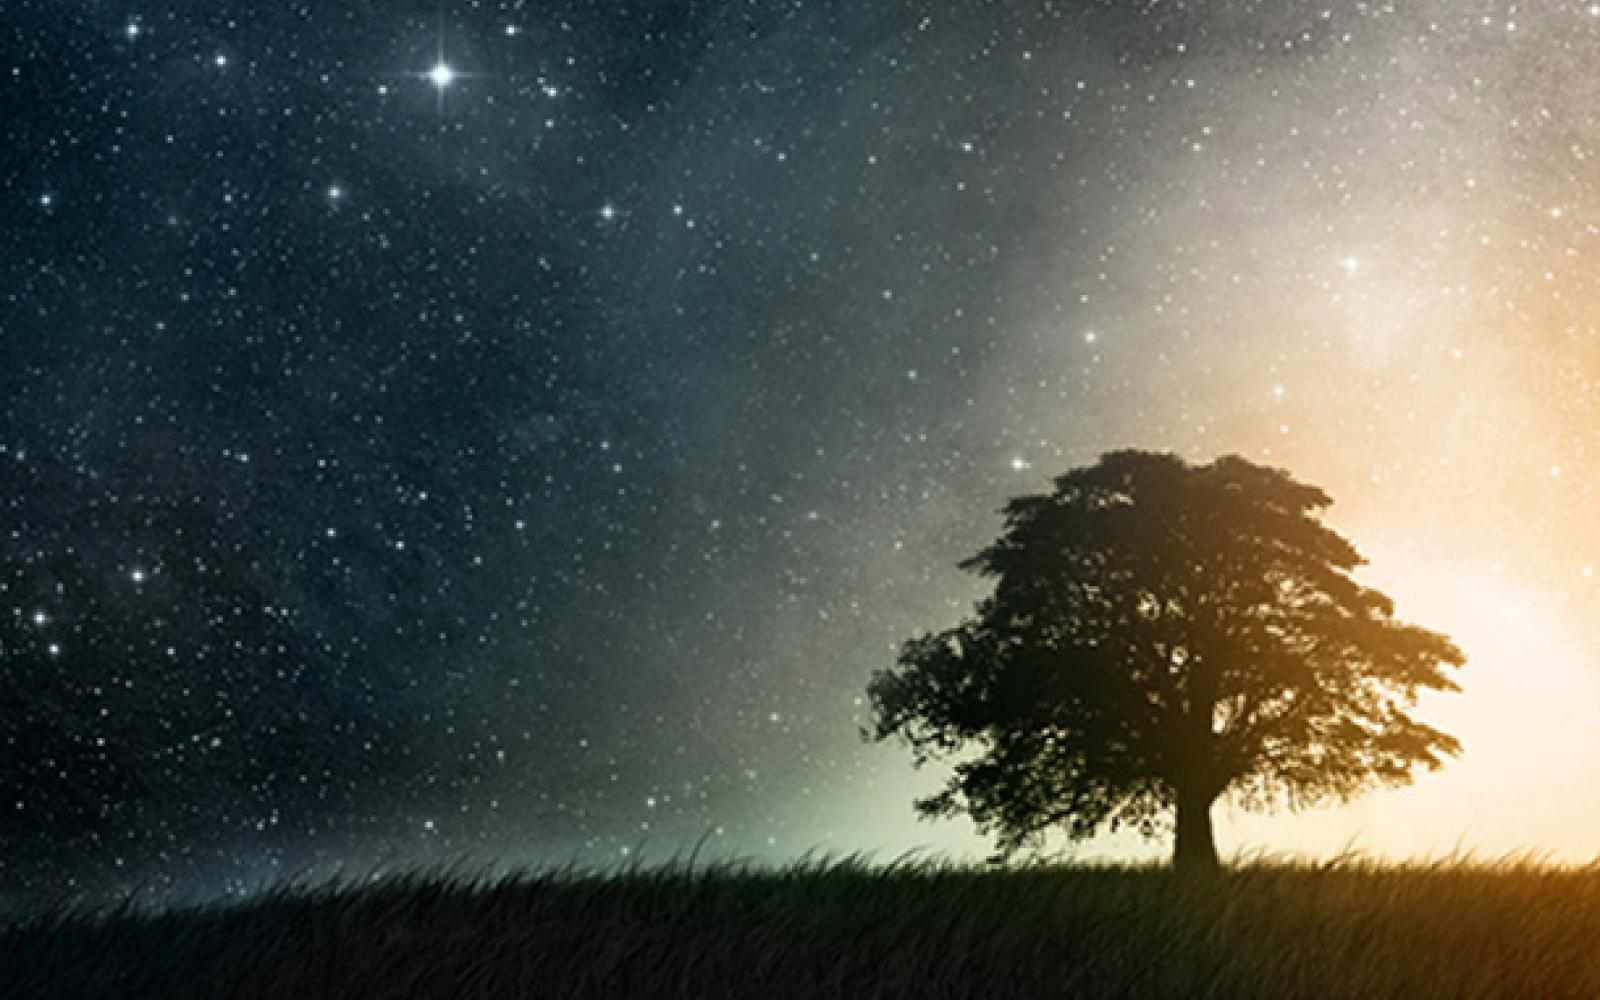 Ashoka Tree and a Skyful of Stars